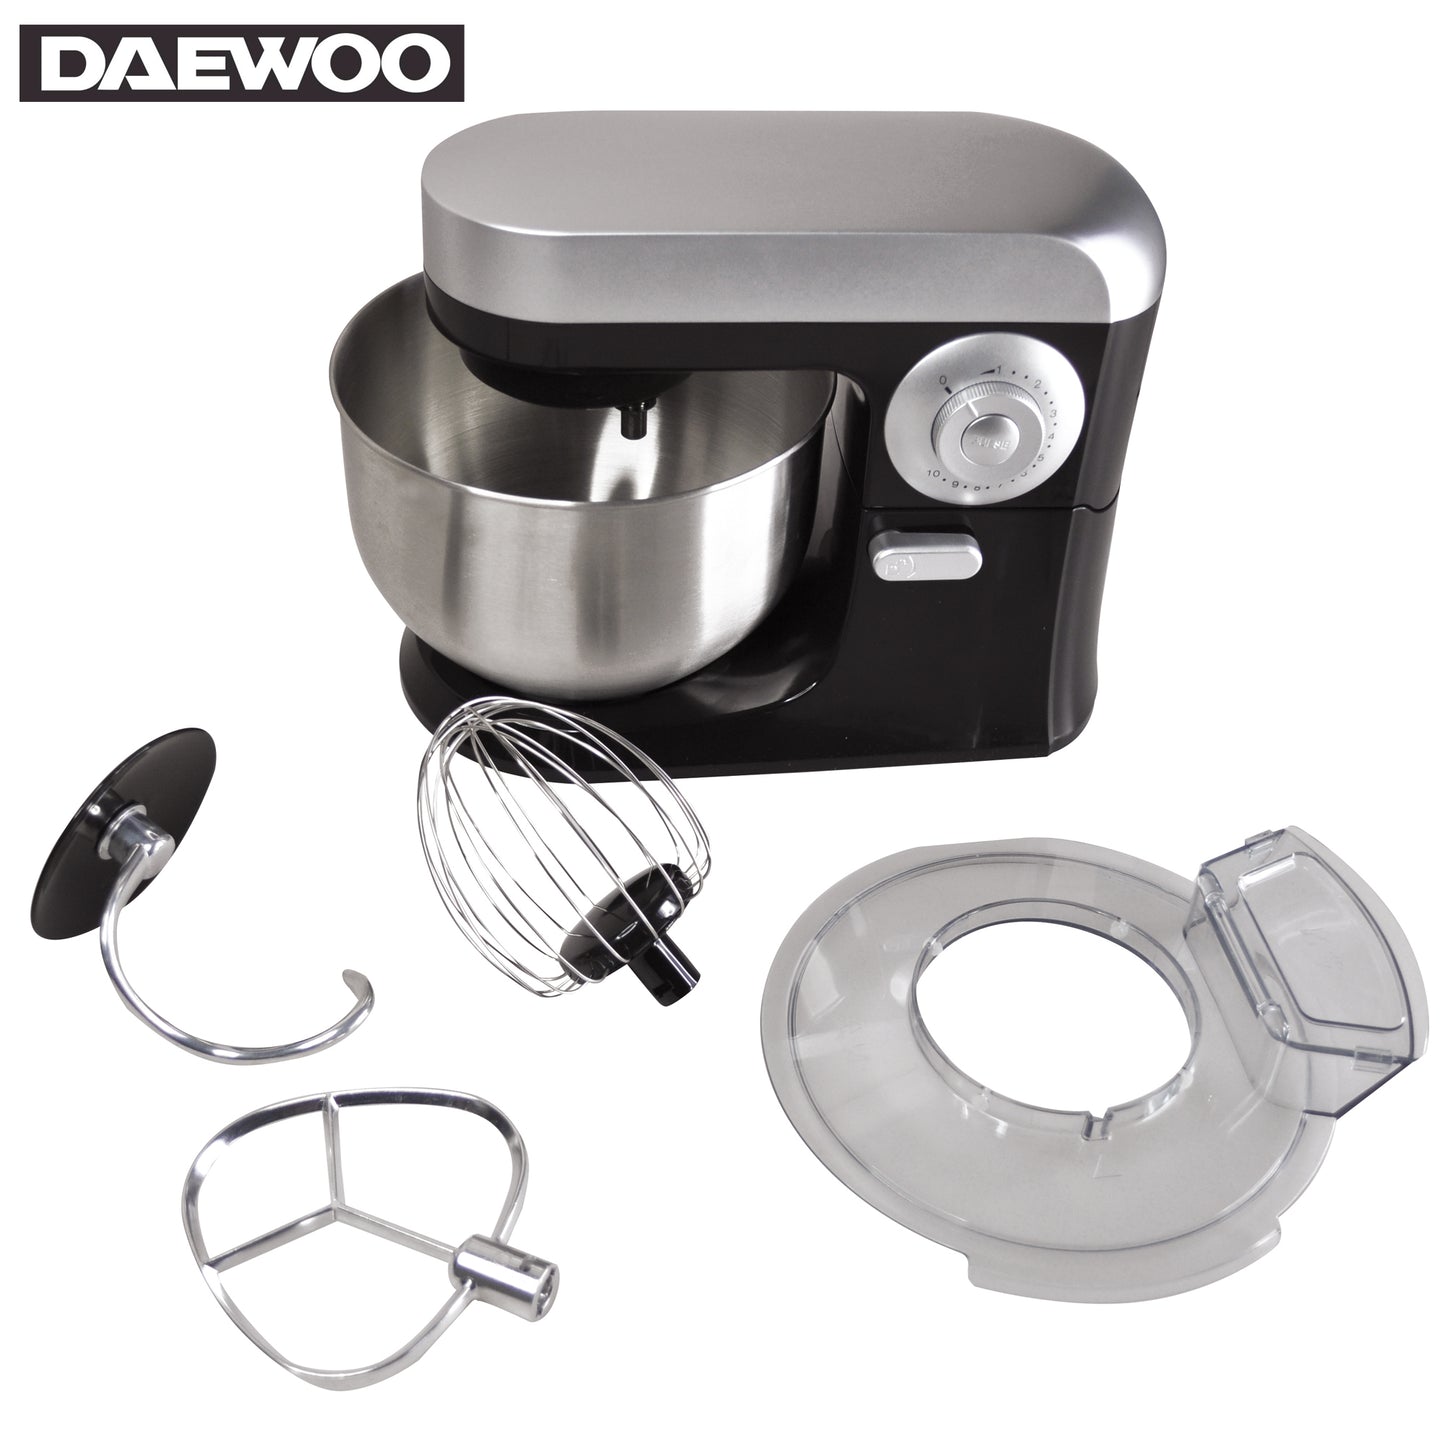 Daewoo SYM-1410: keukenmachine - Design Meubelz